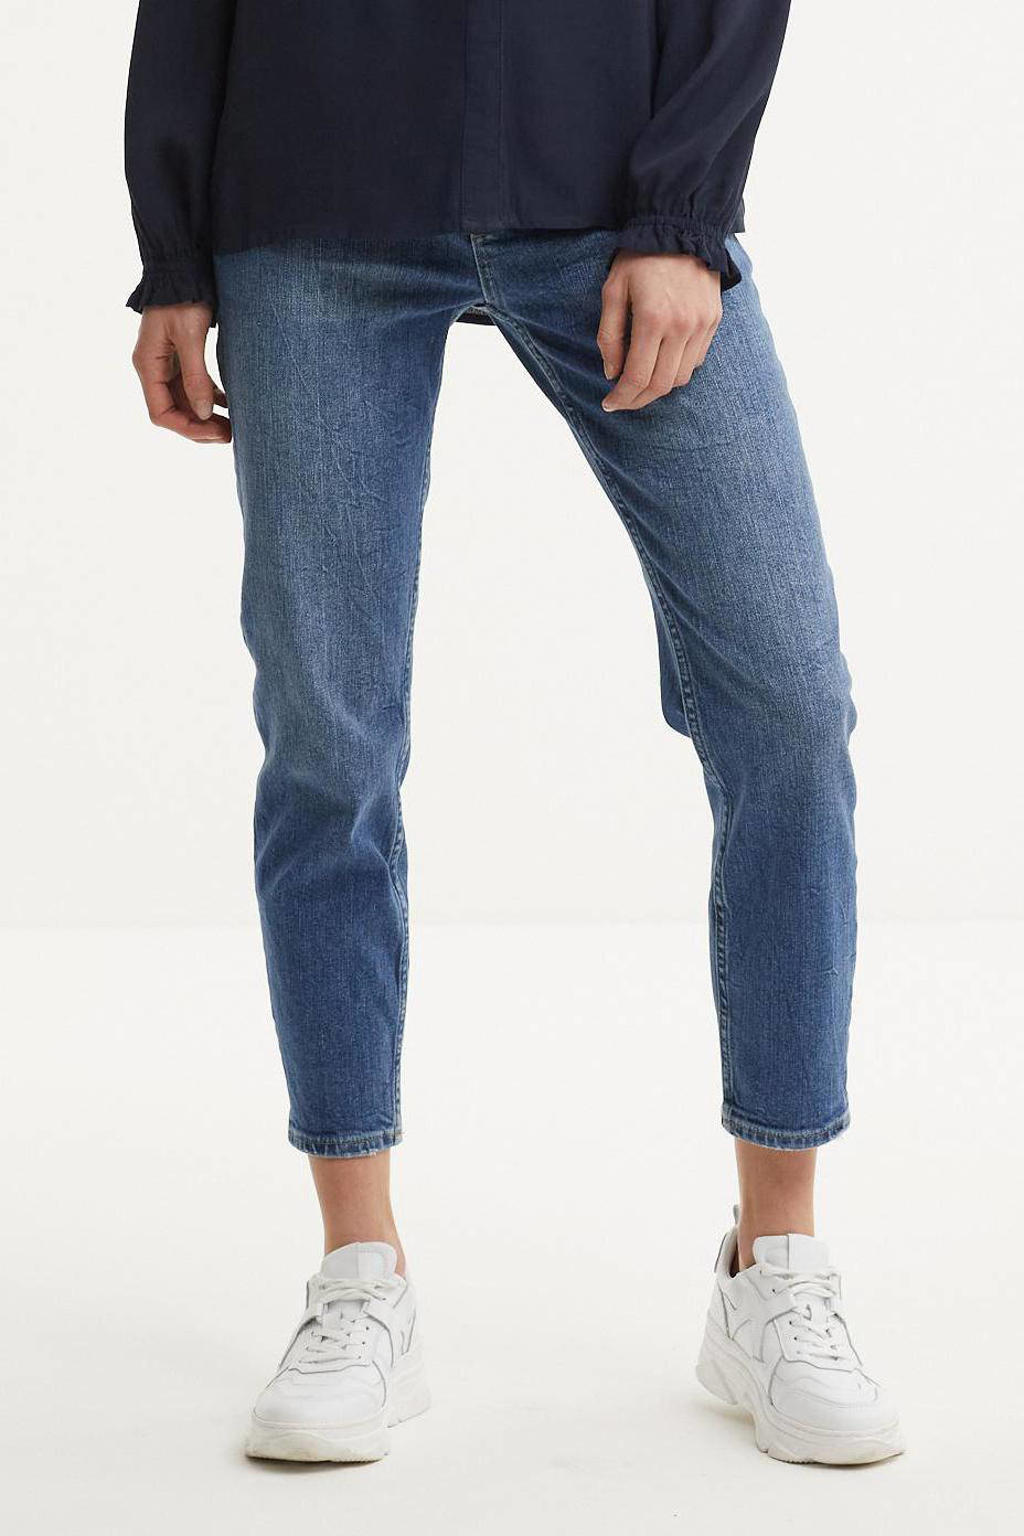 C&A The Denim high waist straight fit jeans light denim